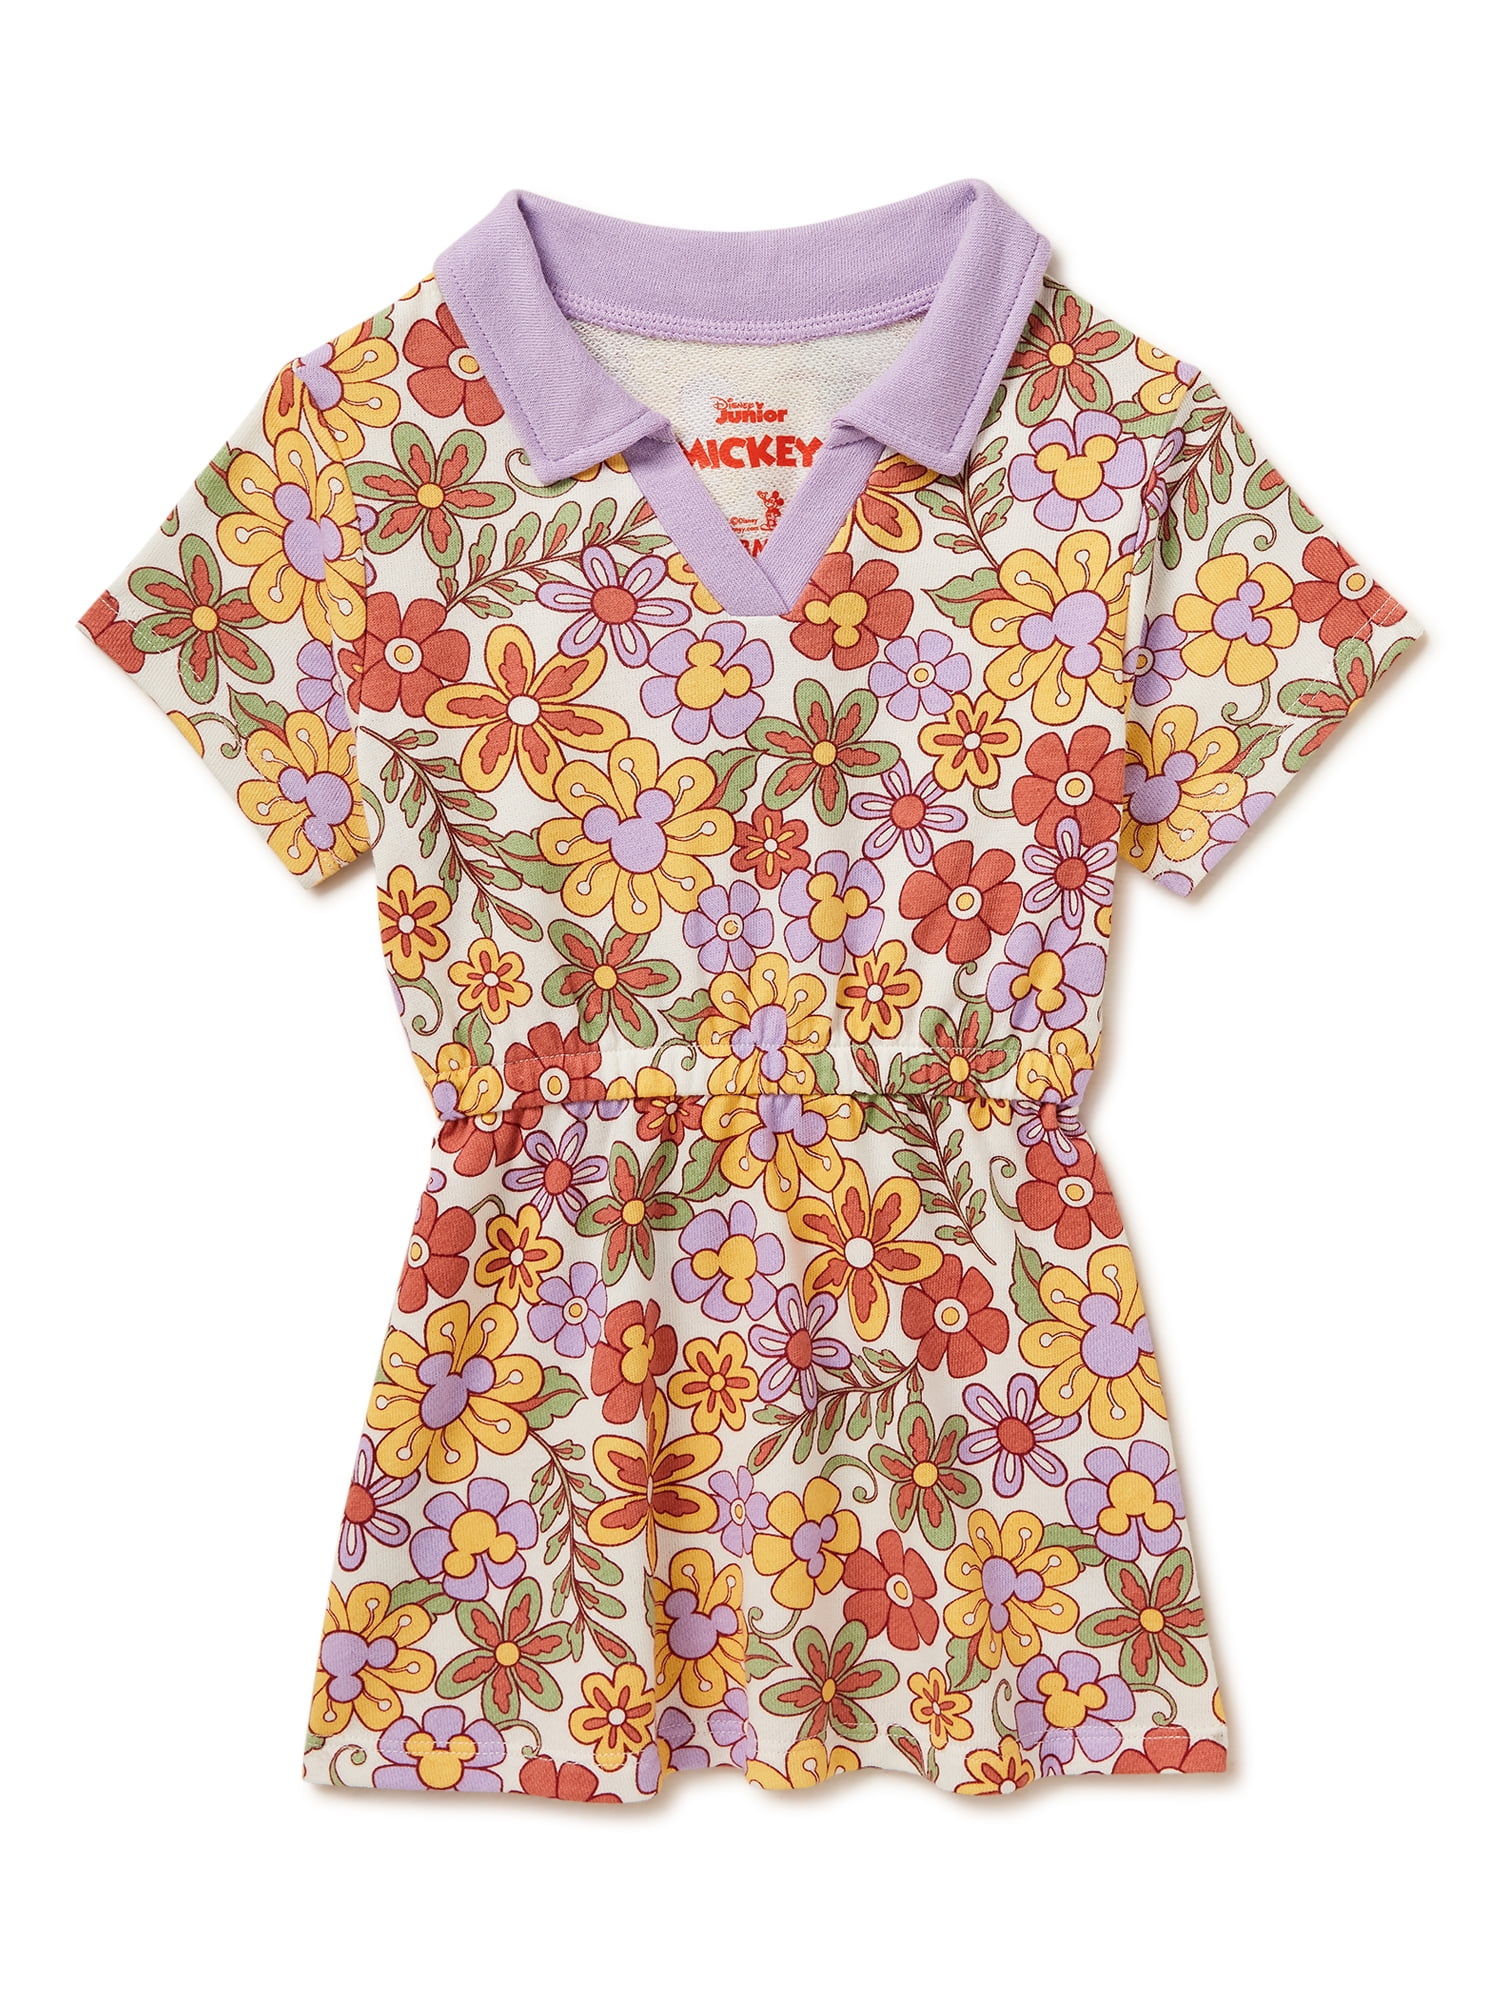 Disney Toddler Girls Mickey Mouse Floral Print Retro Dress, Sizes 2 Toddler-18 Months